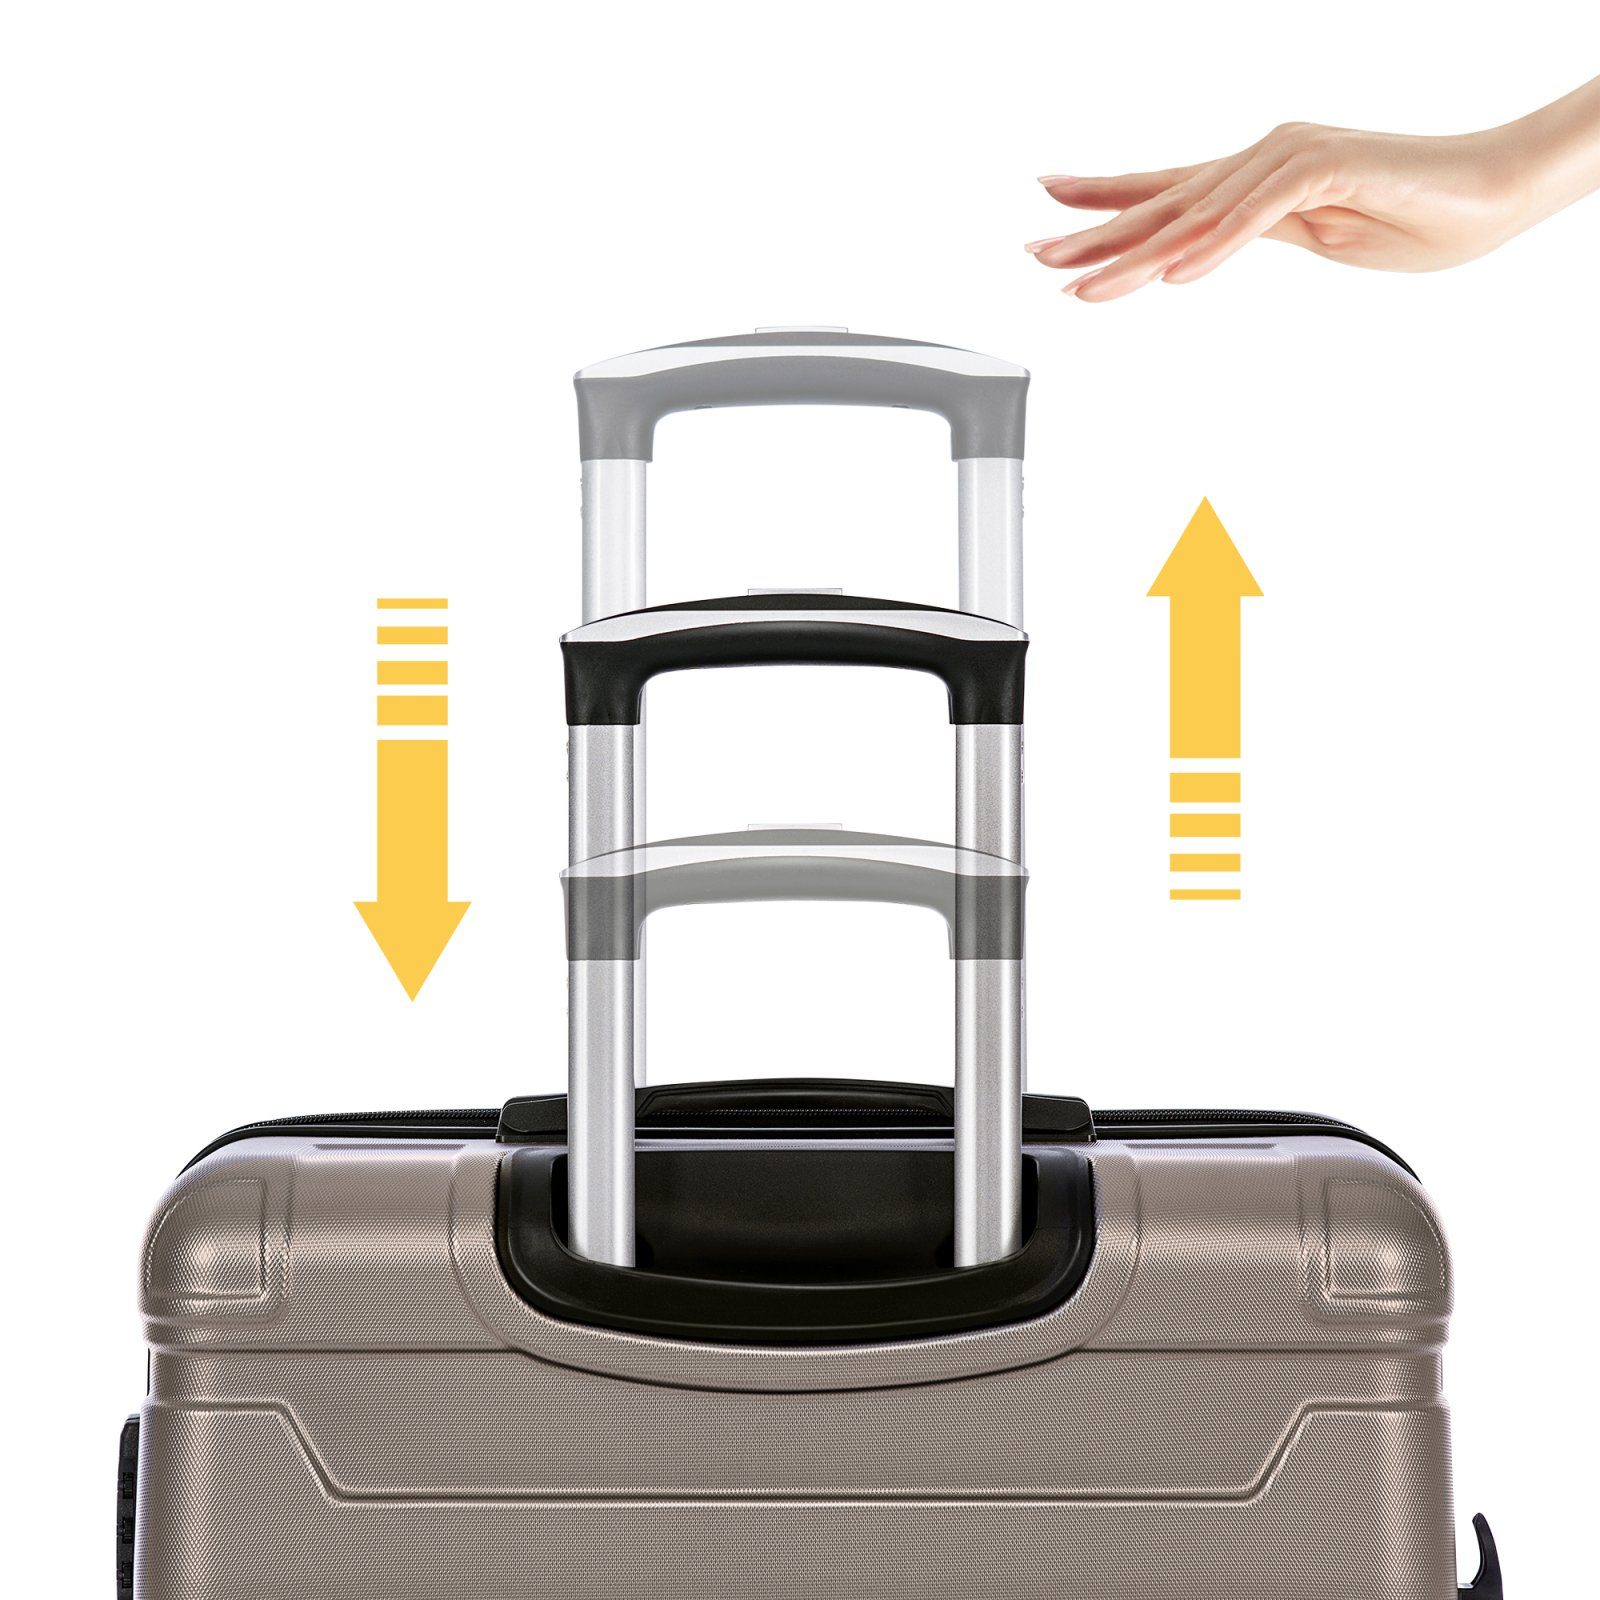 SEEZSSA Handgepäckkoffer Hartschalen-Handgepäck Trolleyset Koffer TSA-Schloss mit Universalrad Gold